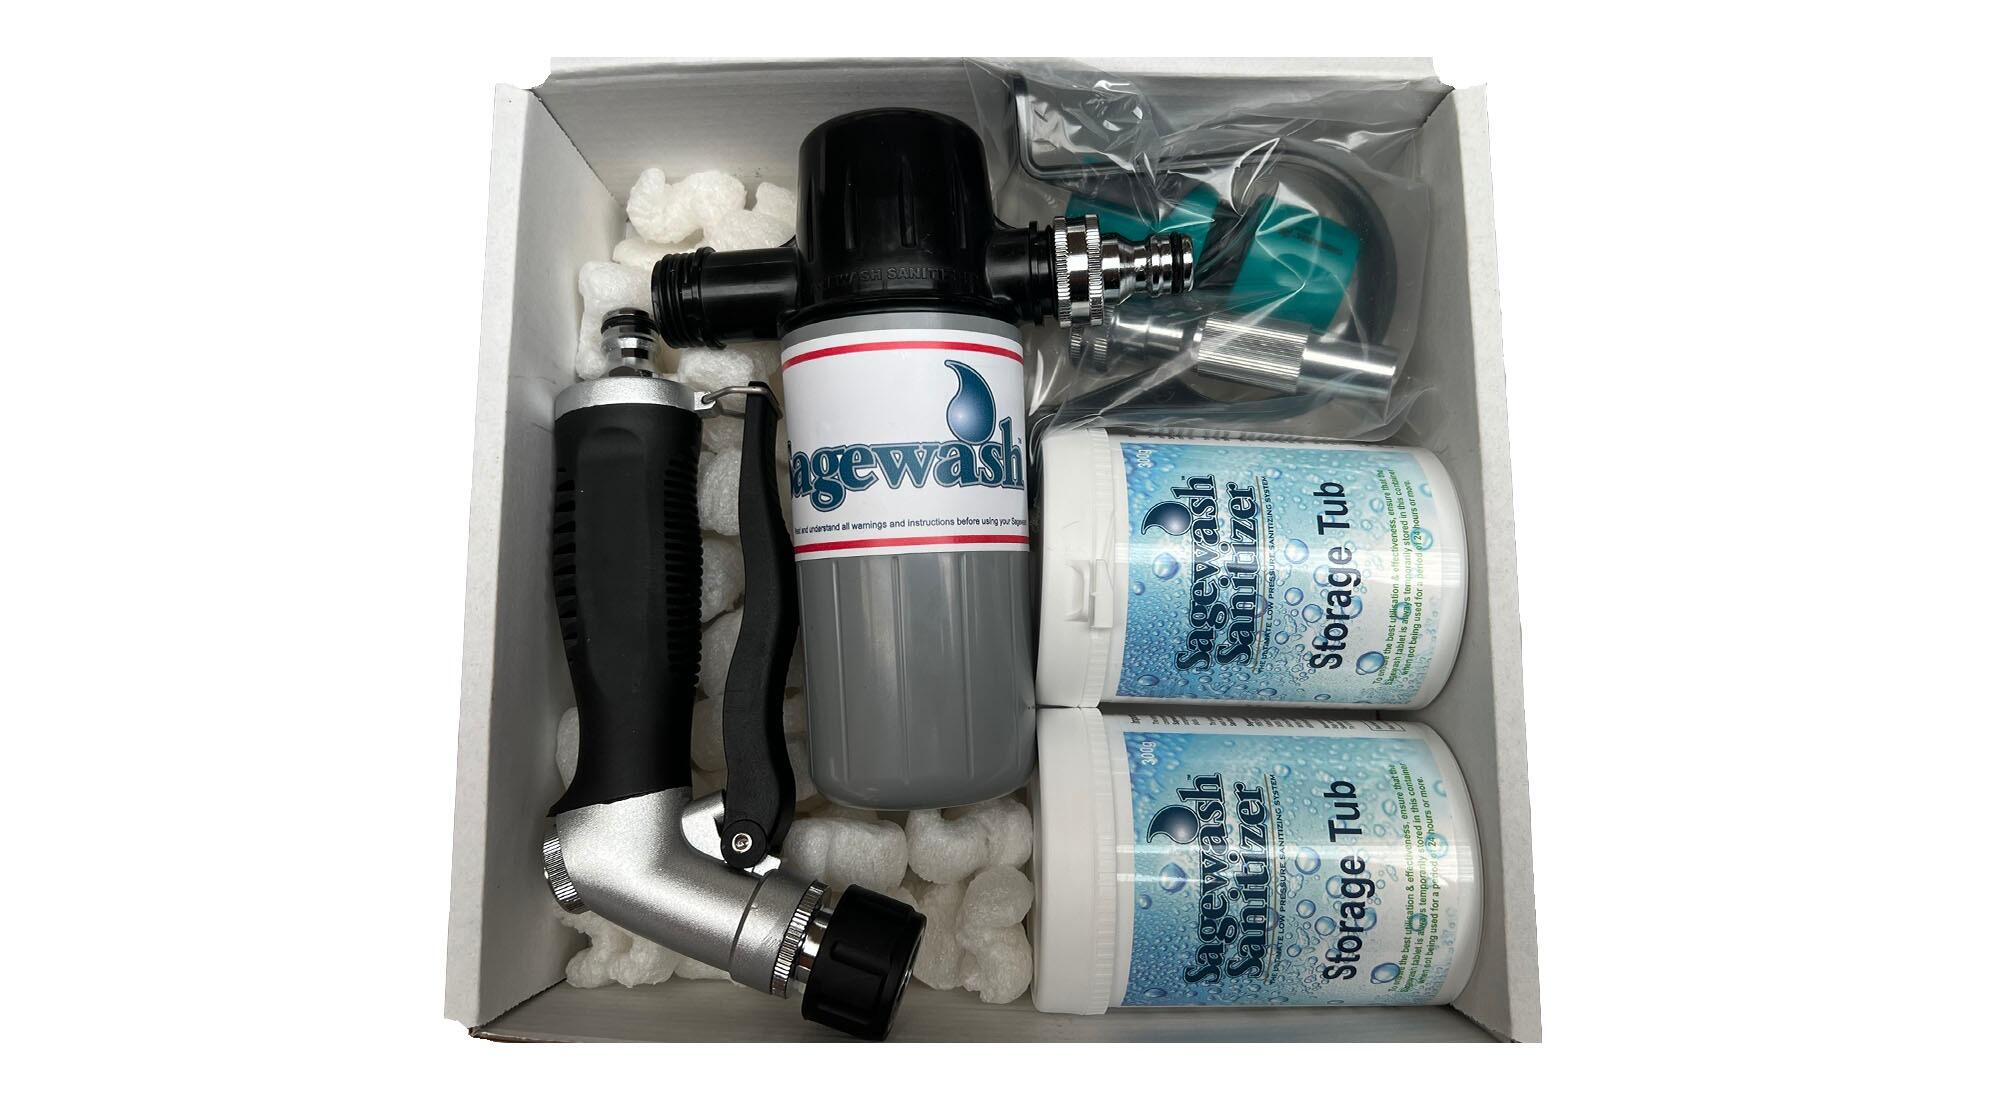 Sagewash Trigger Spray Assembly Starter Pack with 2 Tablets